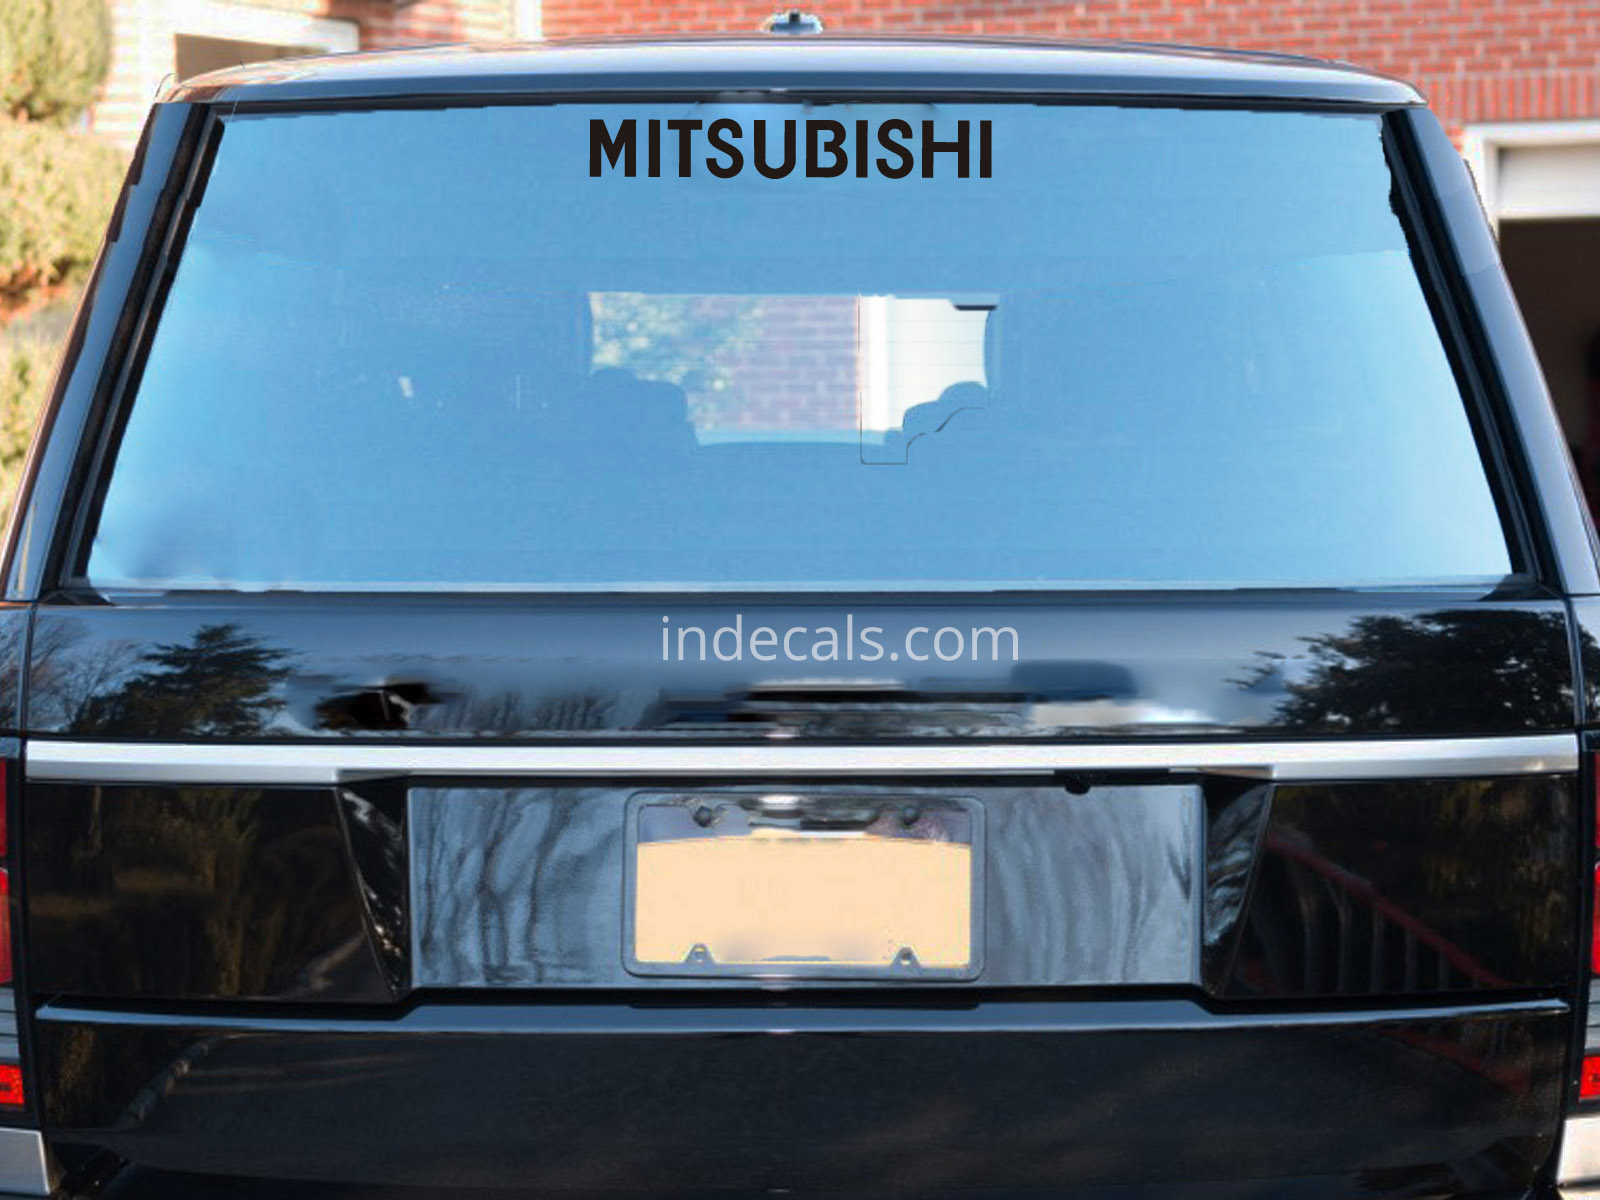 1 x Mitsubishi Sticker for Windshield or Back Window - Black